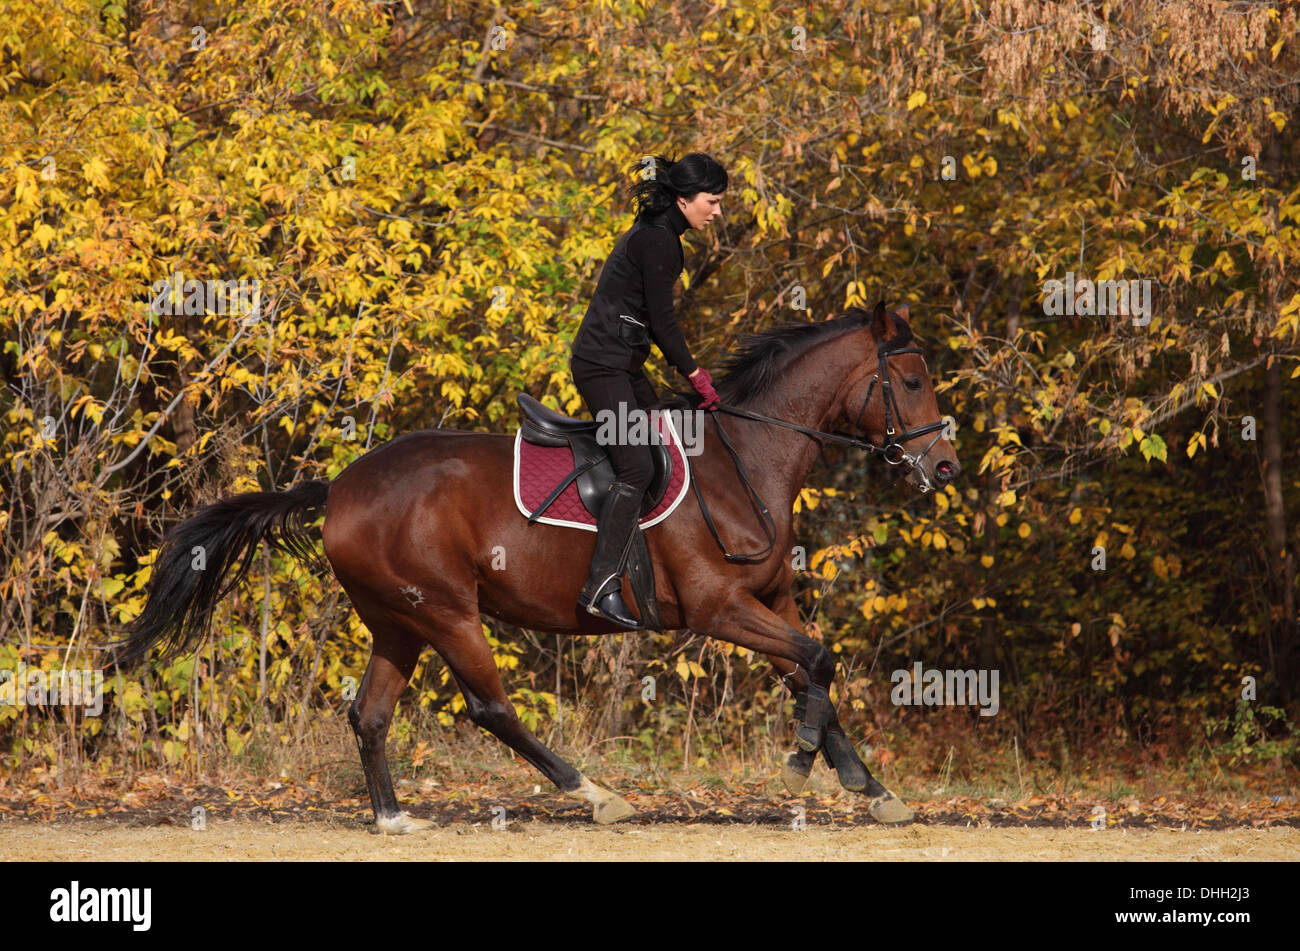 Young woman riding a horse through autumn woodland Stock Photo